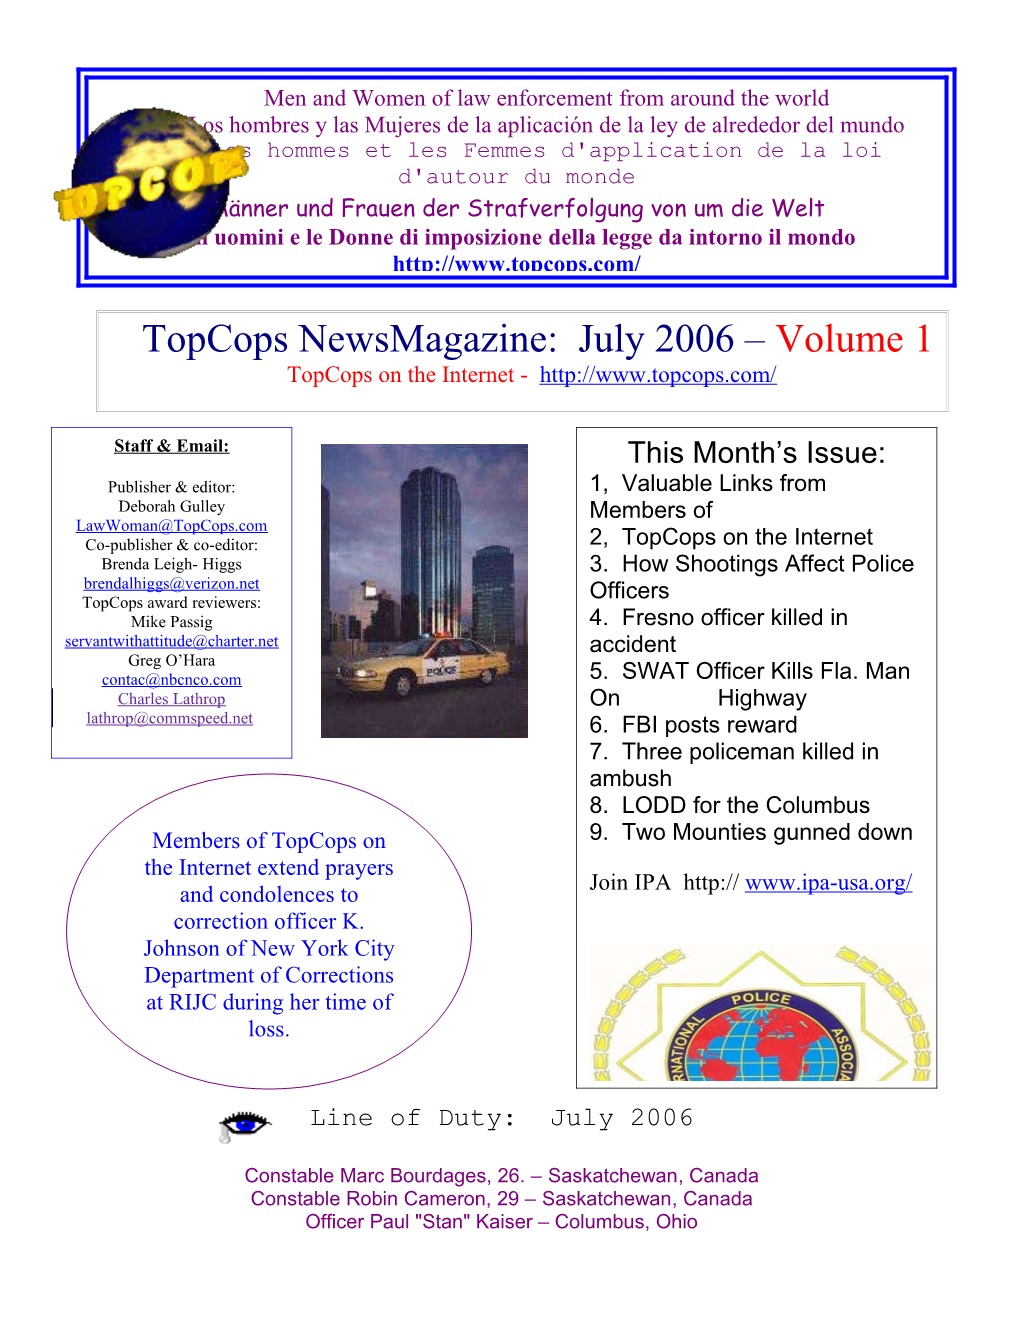 Topcops Newsmagazine: July 2006 Volume 1